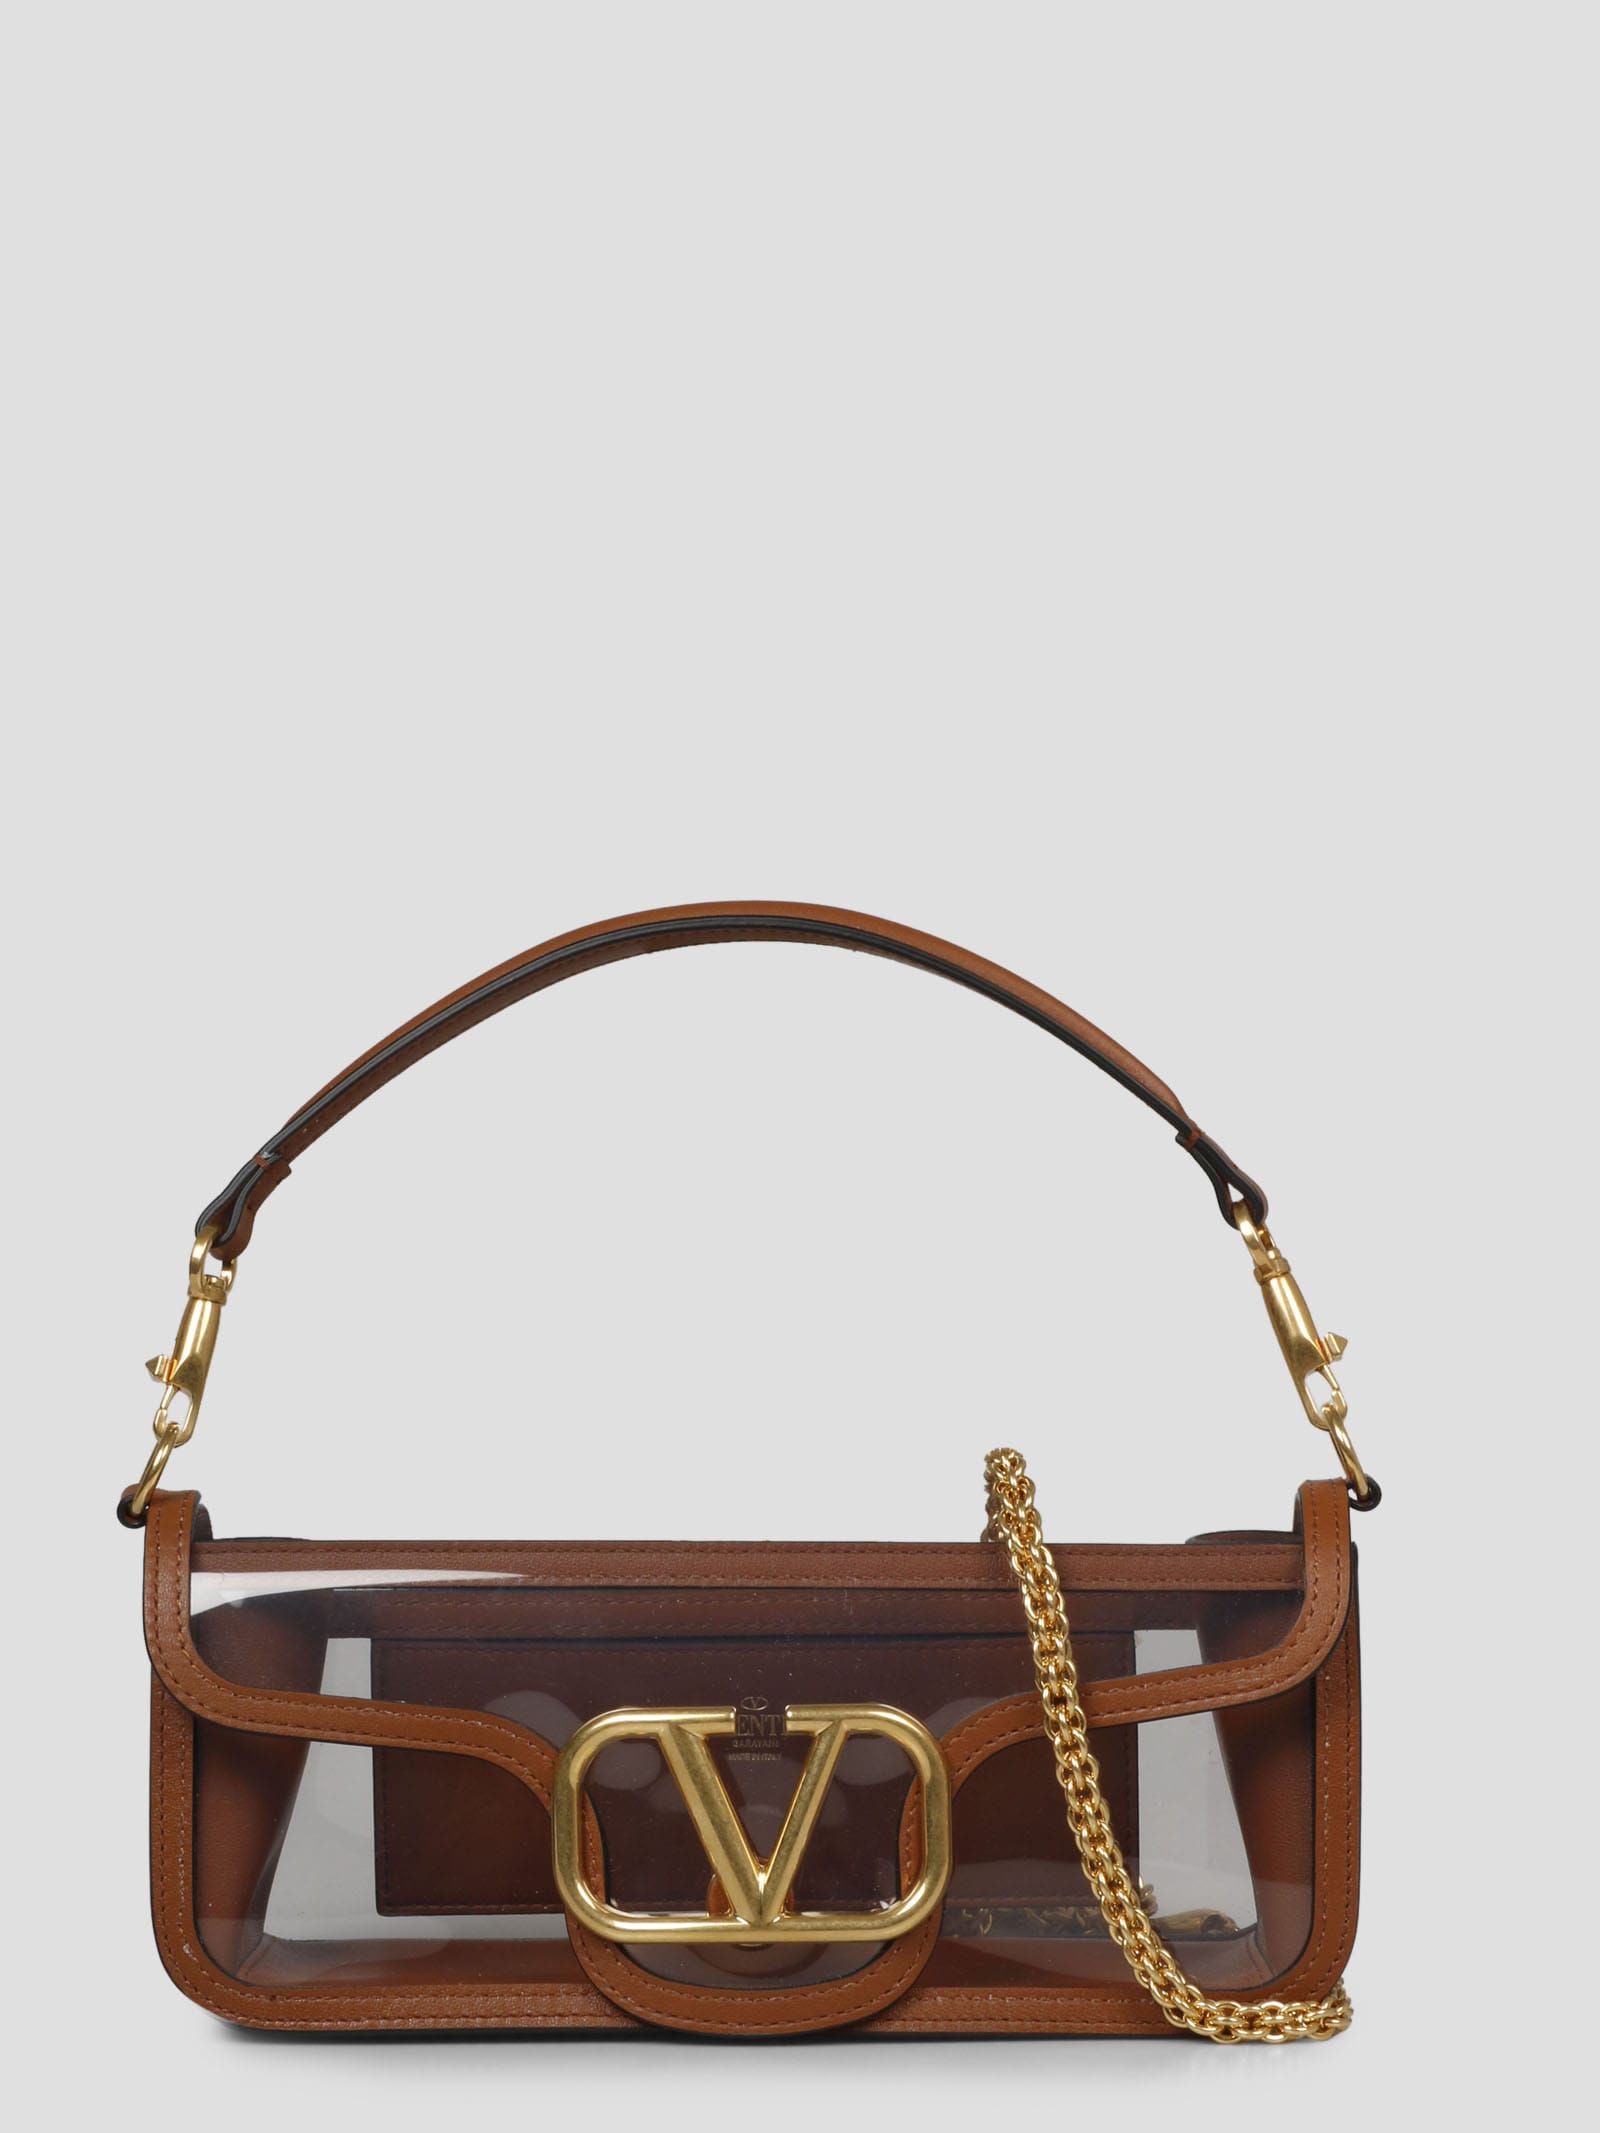 Valentino Garavani's Locò bag is your latest '90s-inspired style staple